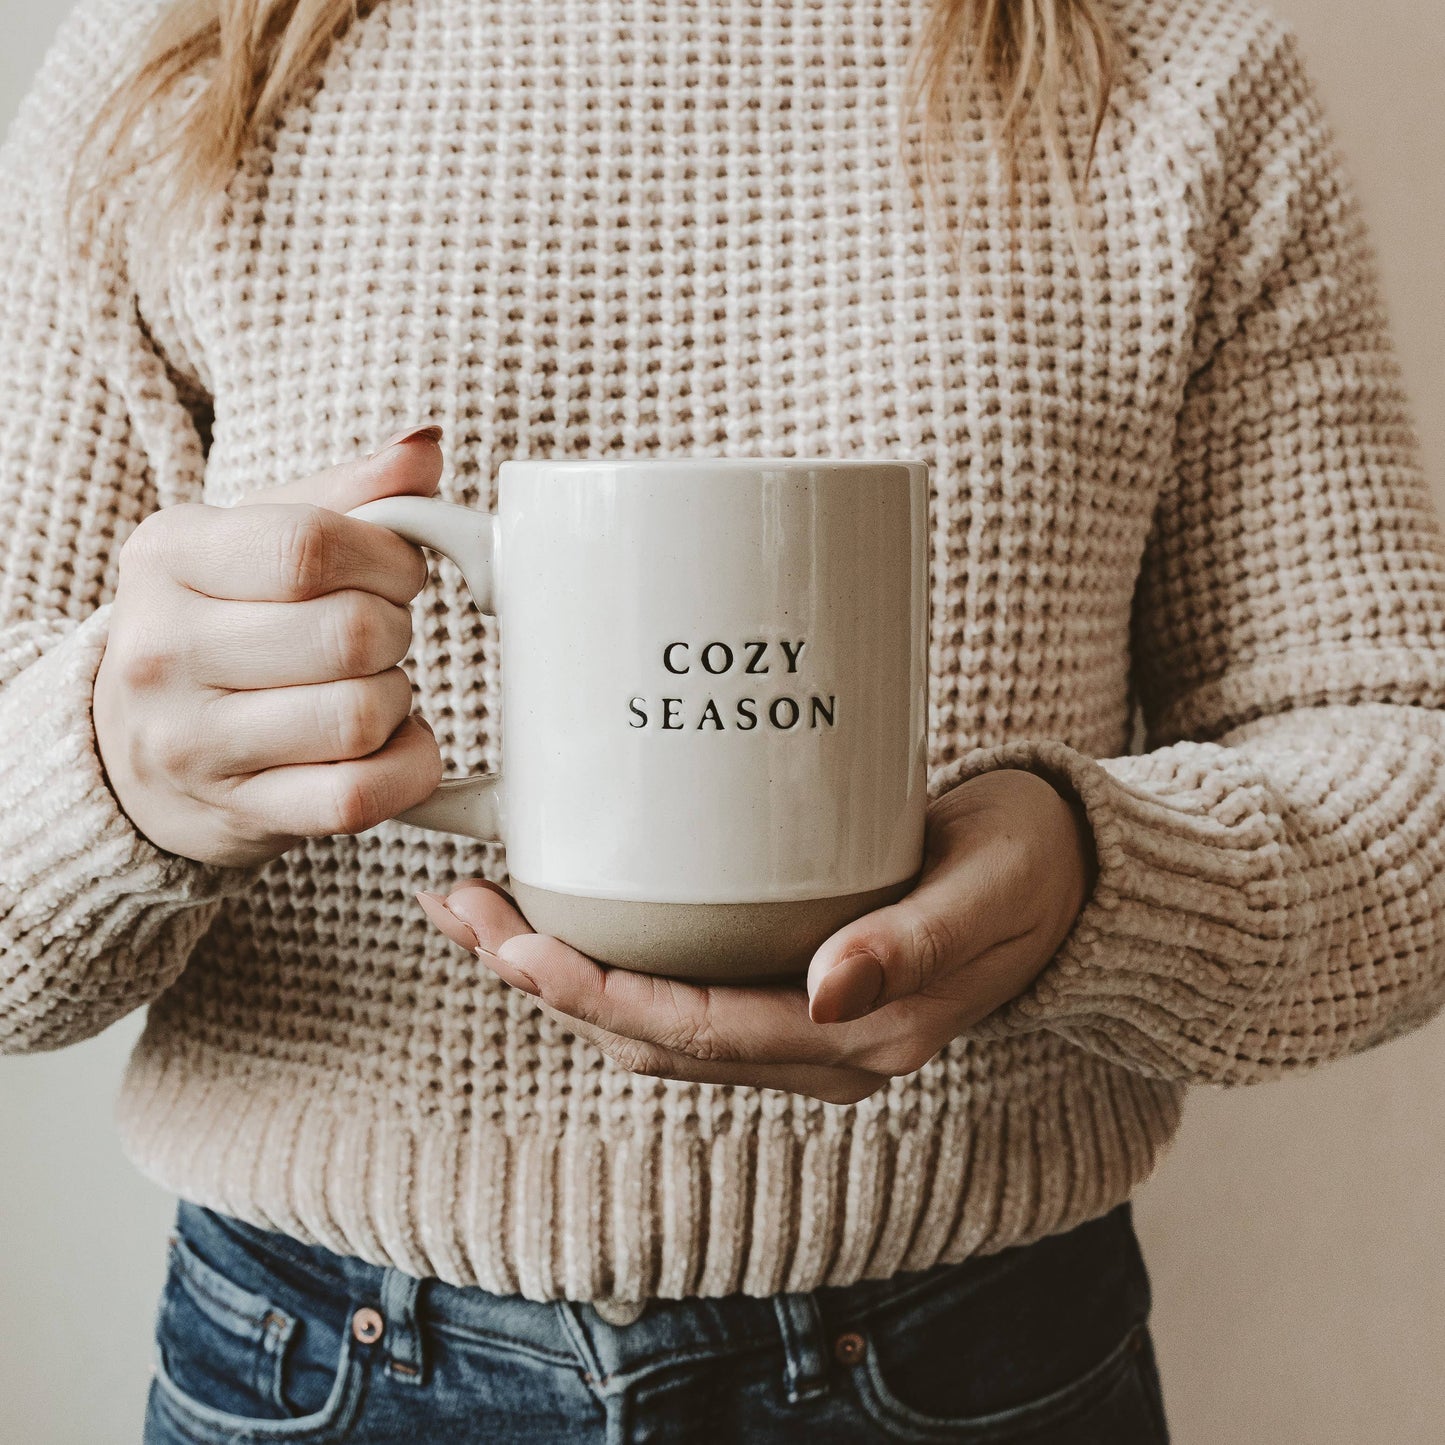 Cozy Season Stoneware Coffee Mug 14oz